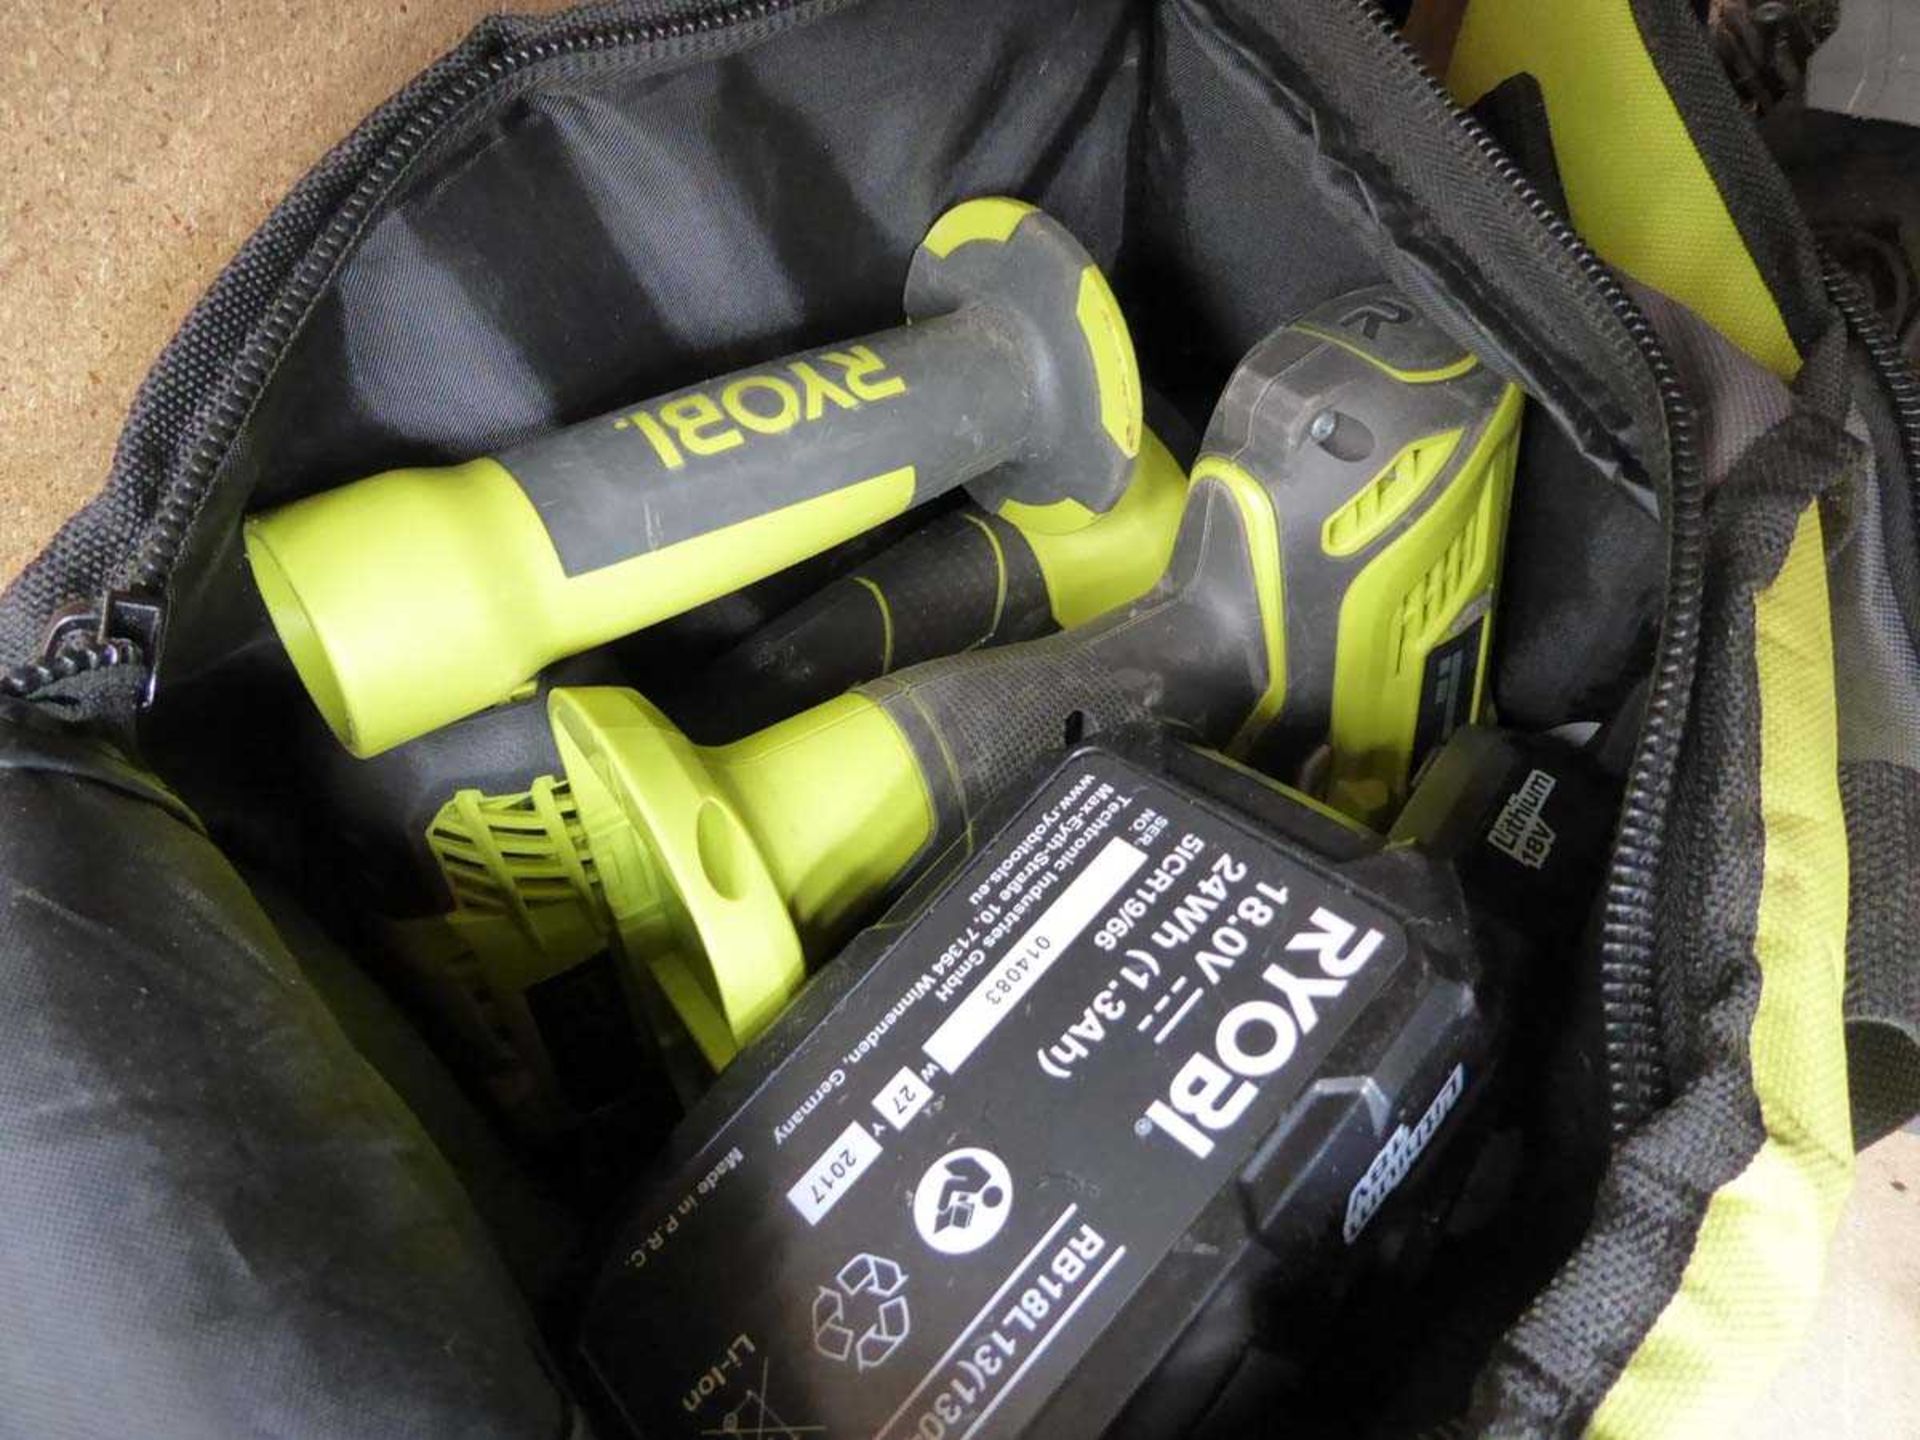 Large quantity of Ryobi battery powered tools - Image 2 of 4